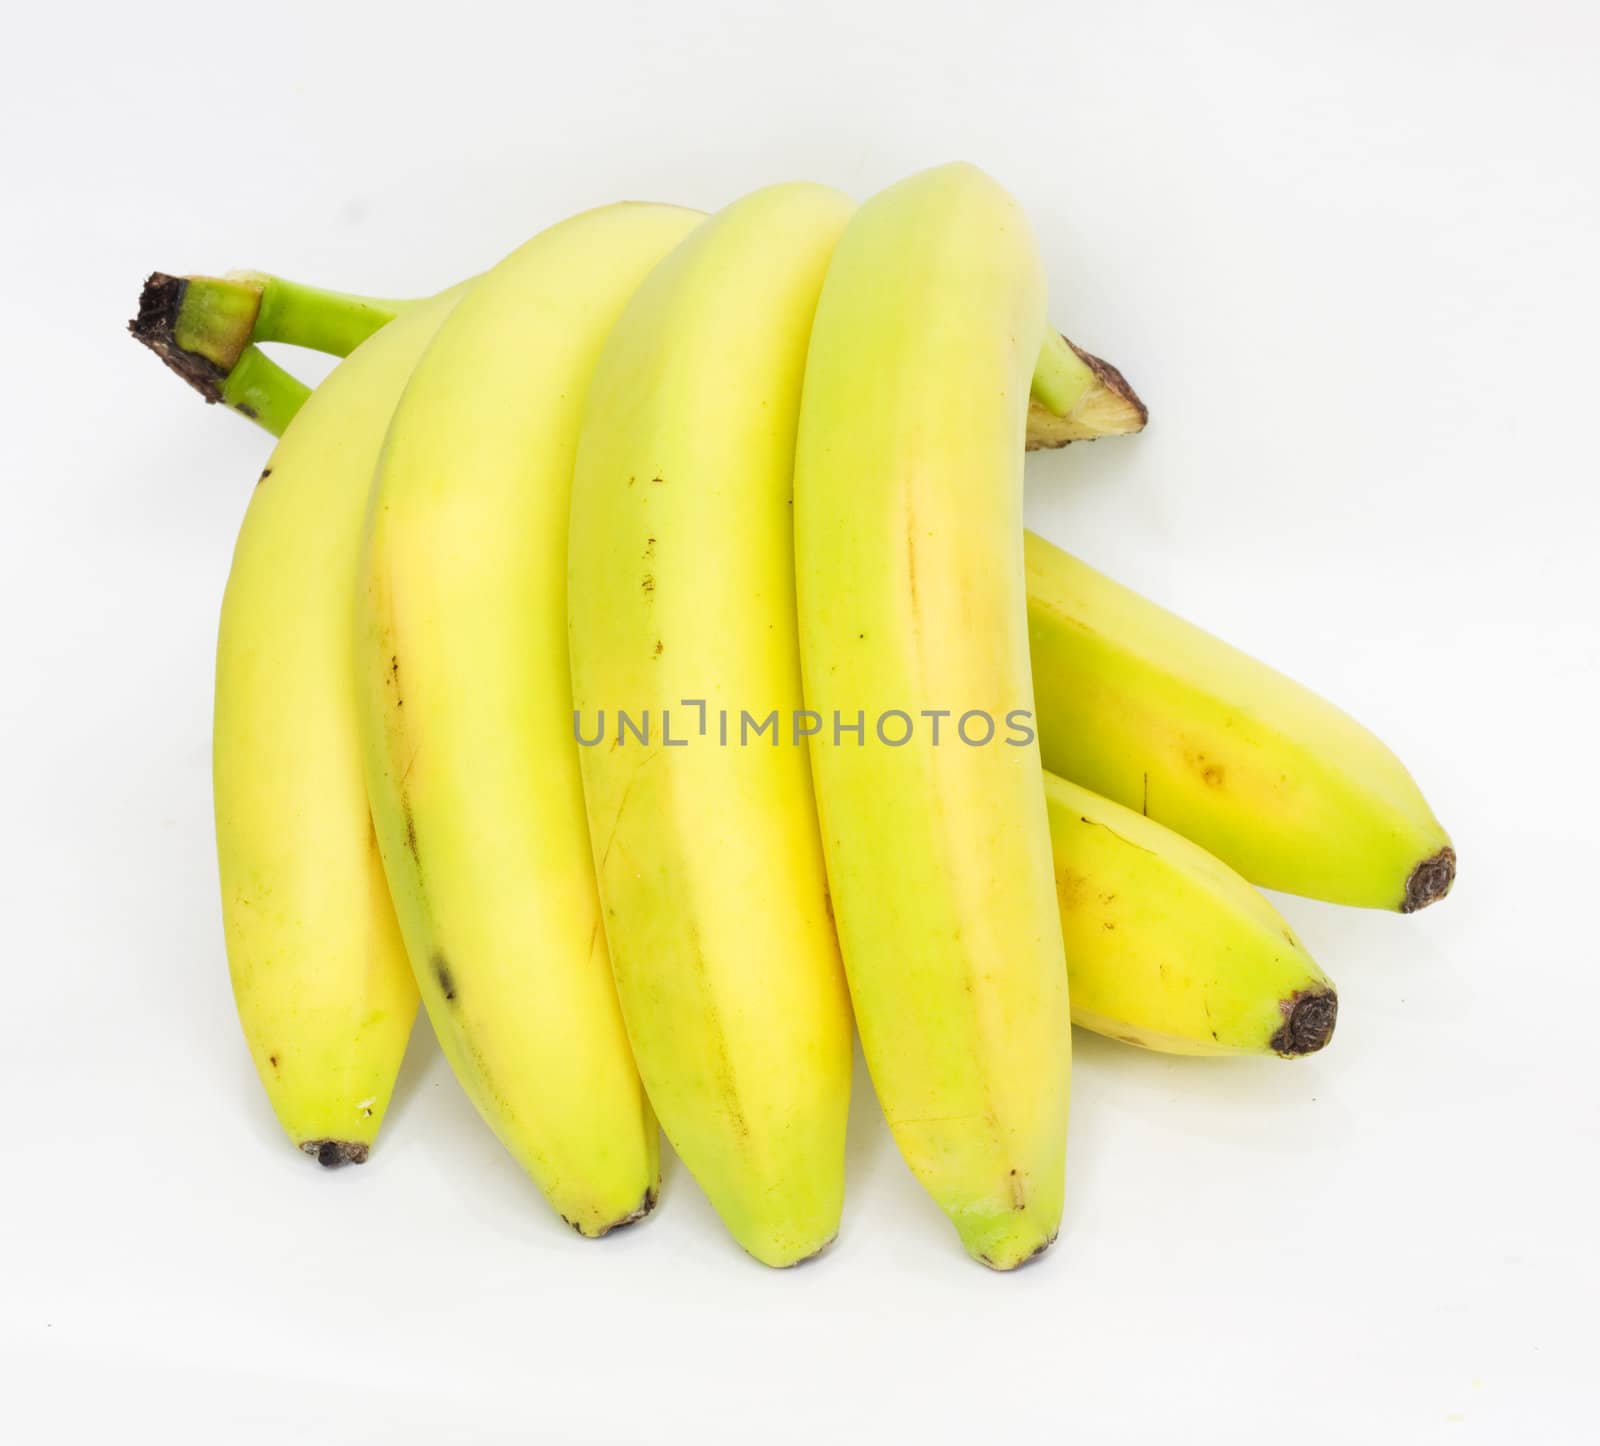 bananas on white background 